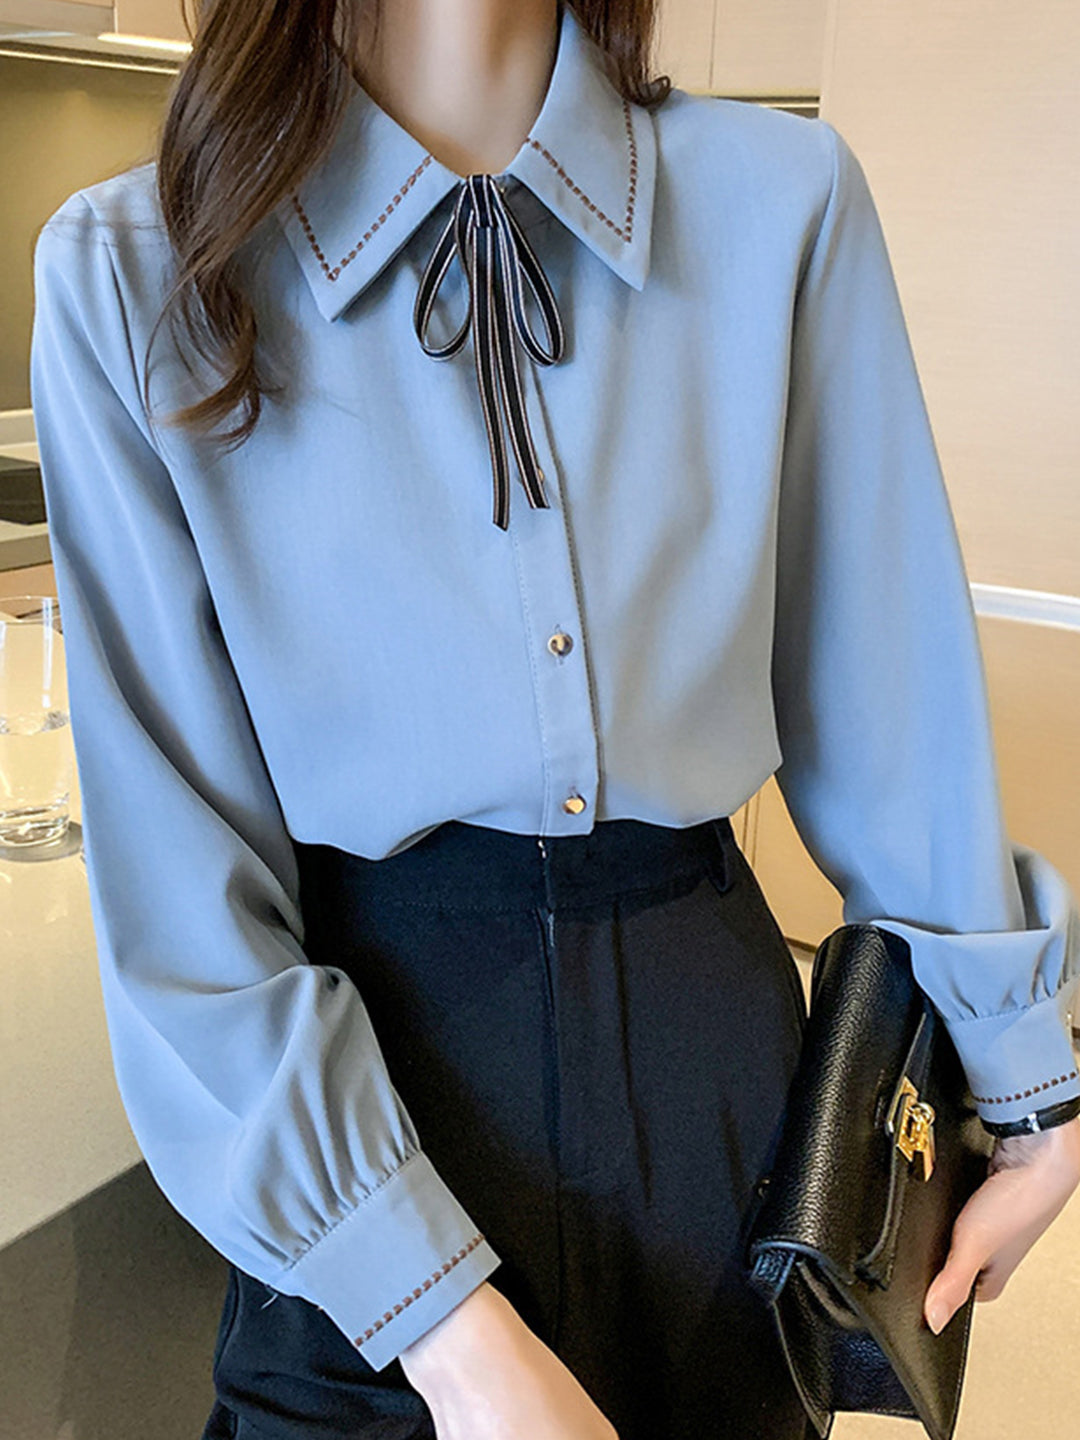 Elizabeth French Style Chiffon Bow Tie Lapel Blouse Shirt